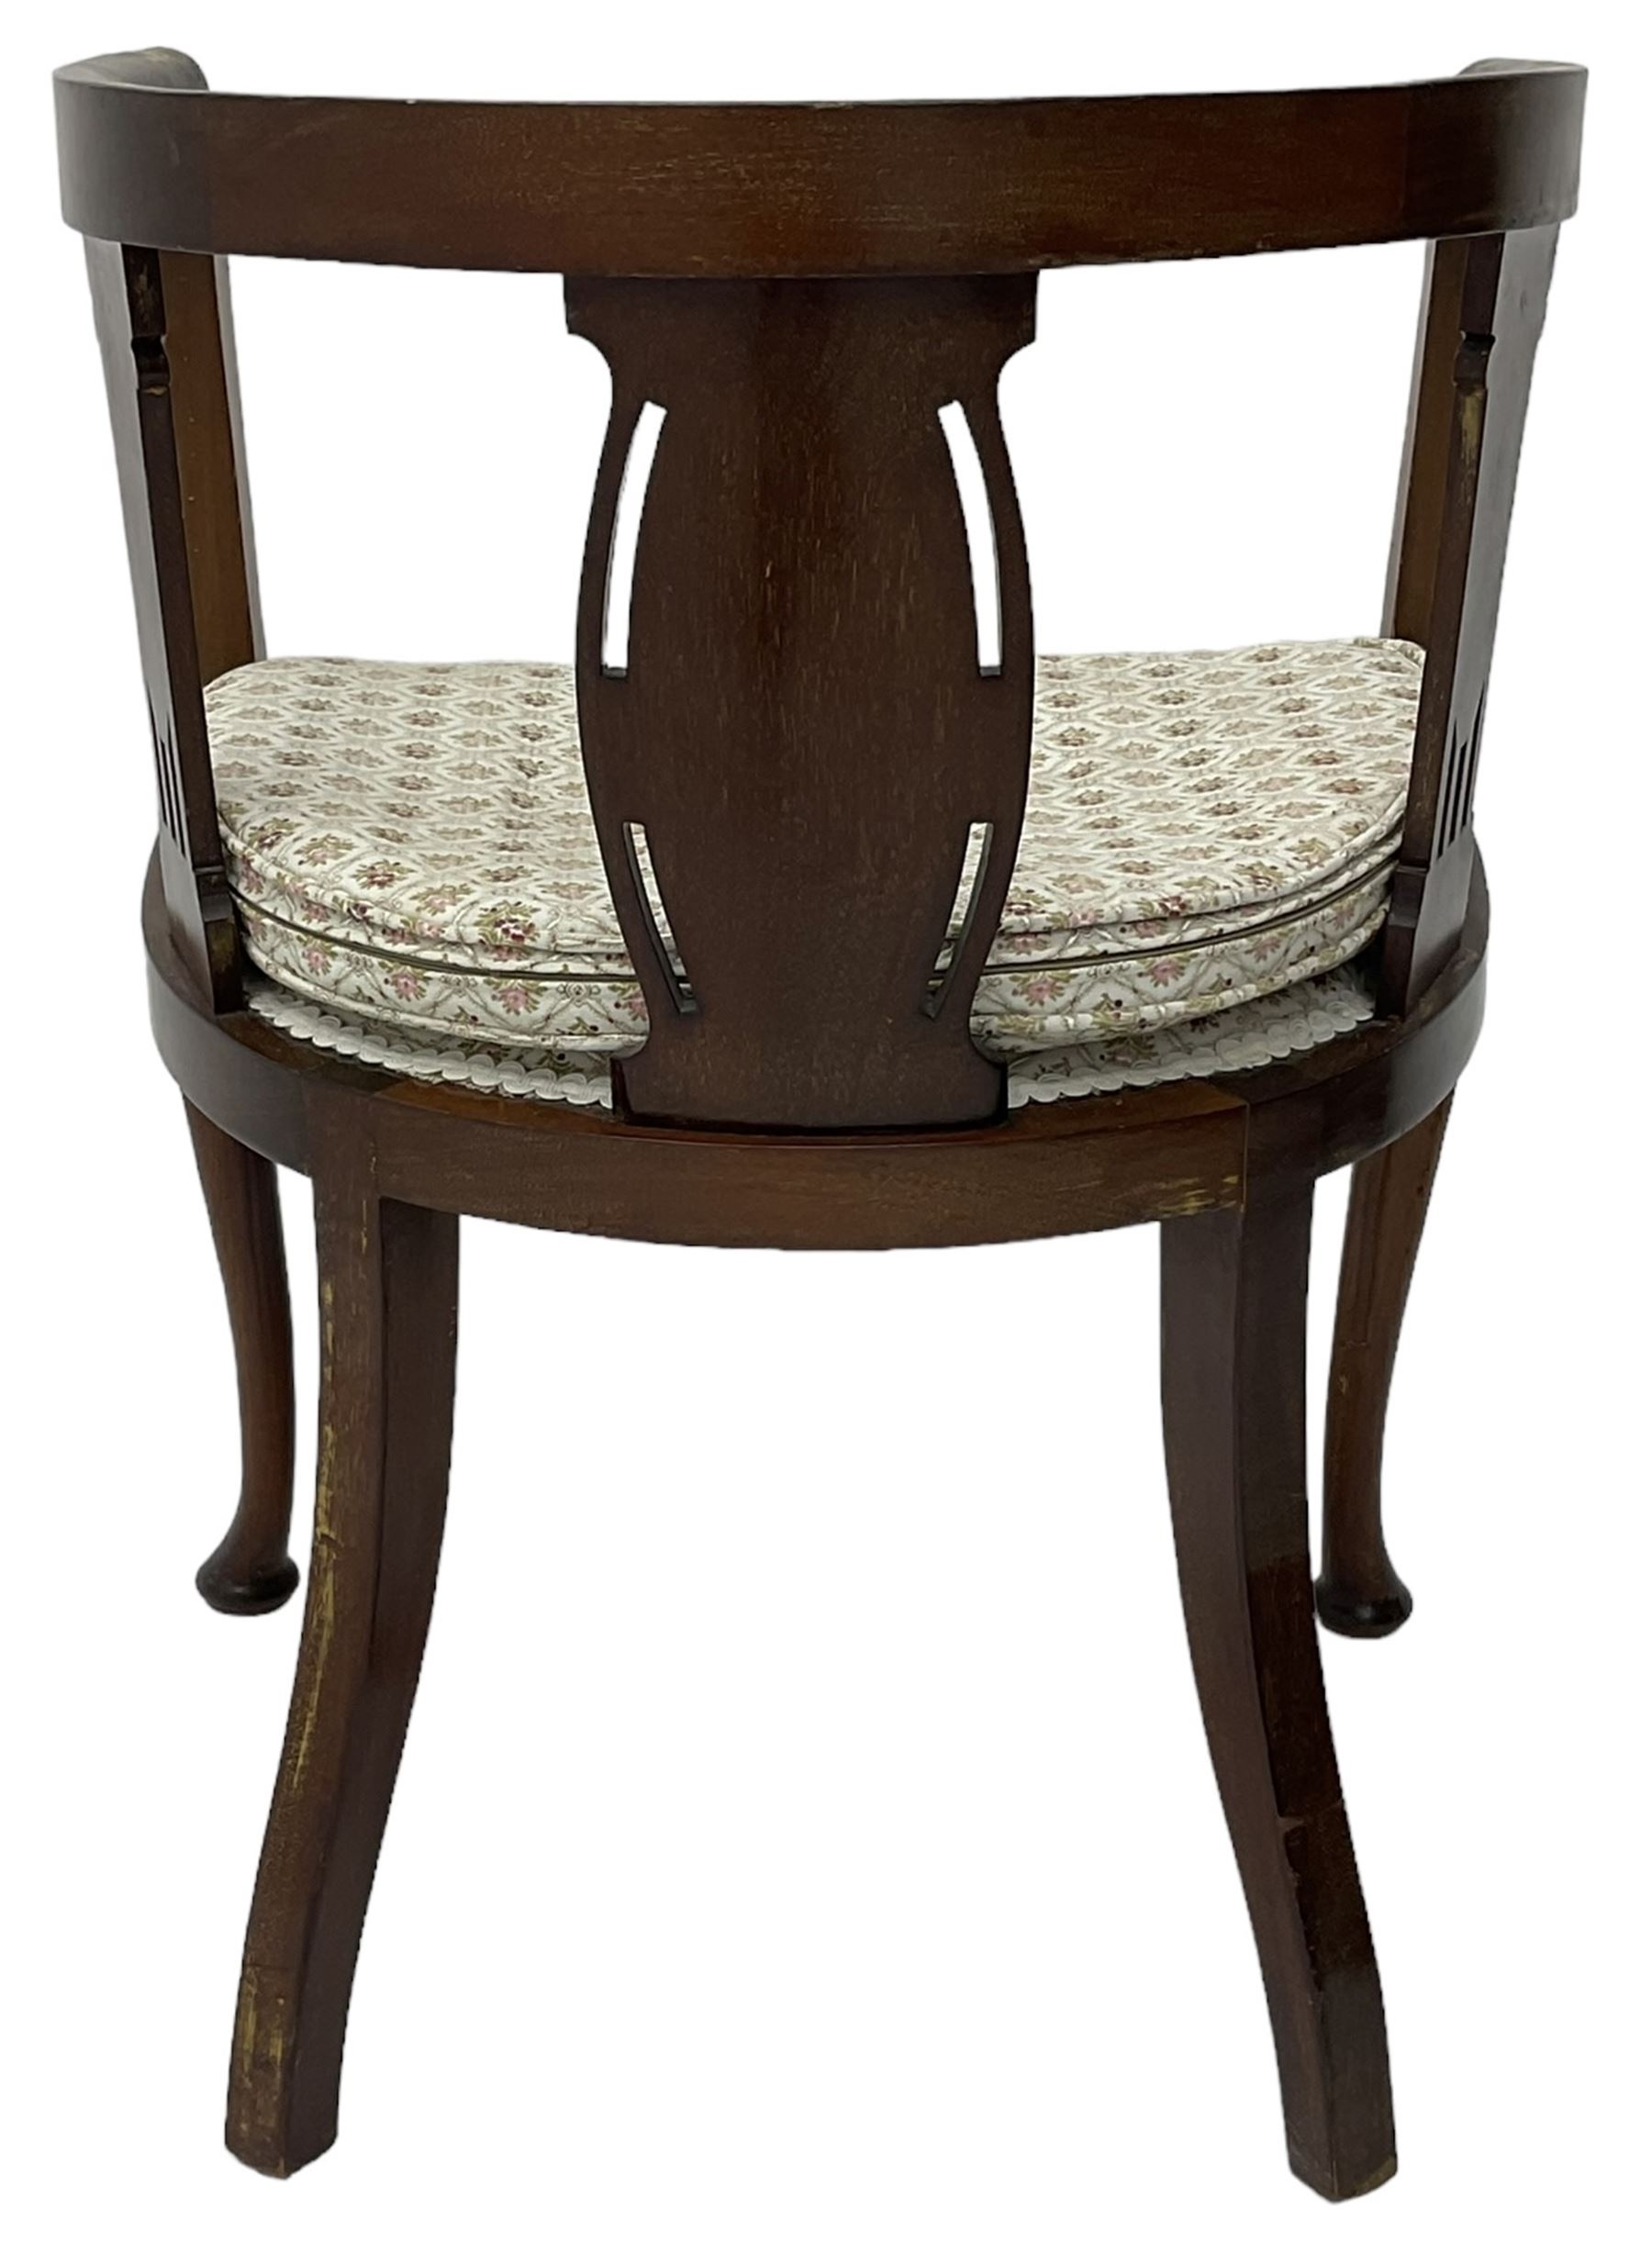 Early 20th century mahogany tub shaped chair - Image 4 of 5